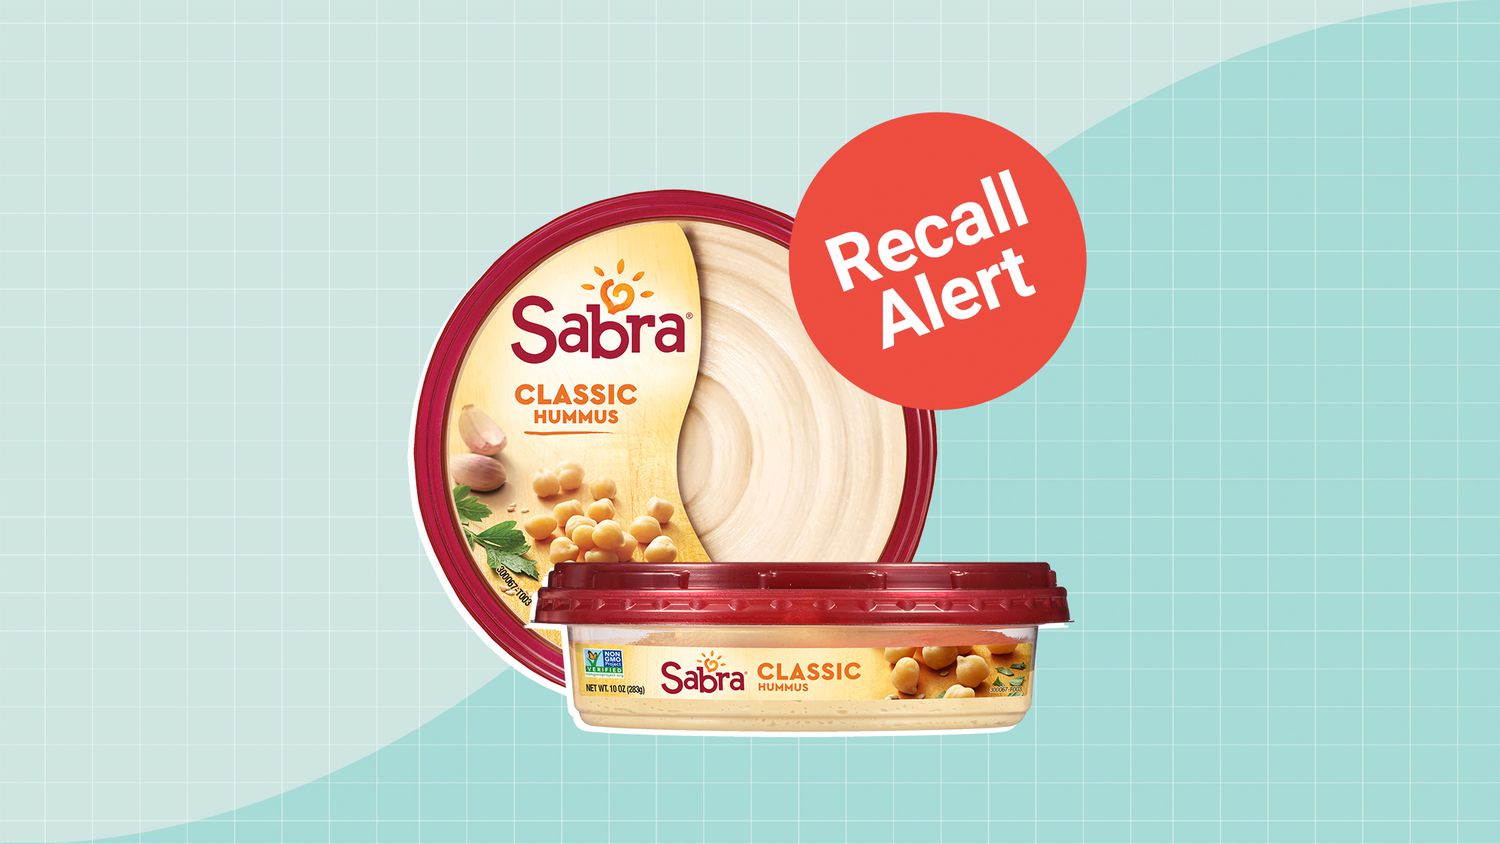 Sabra Hummus Recall Alert